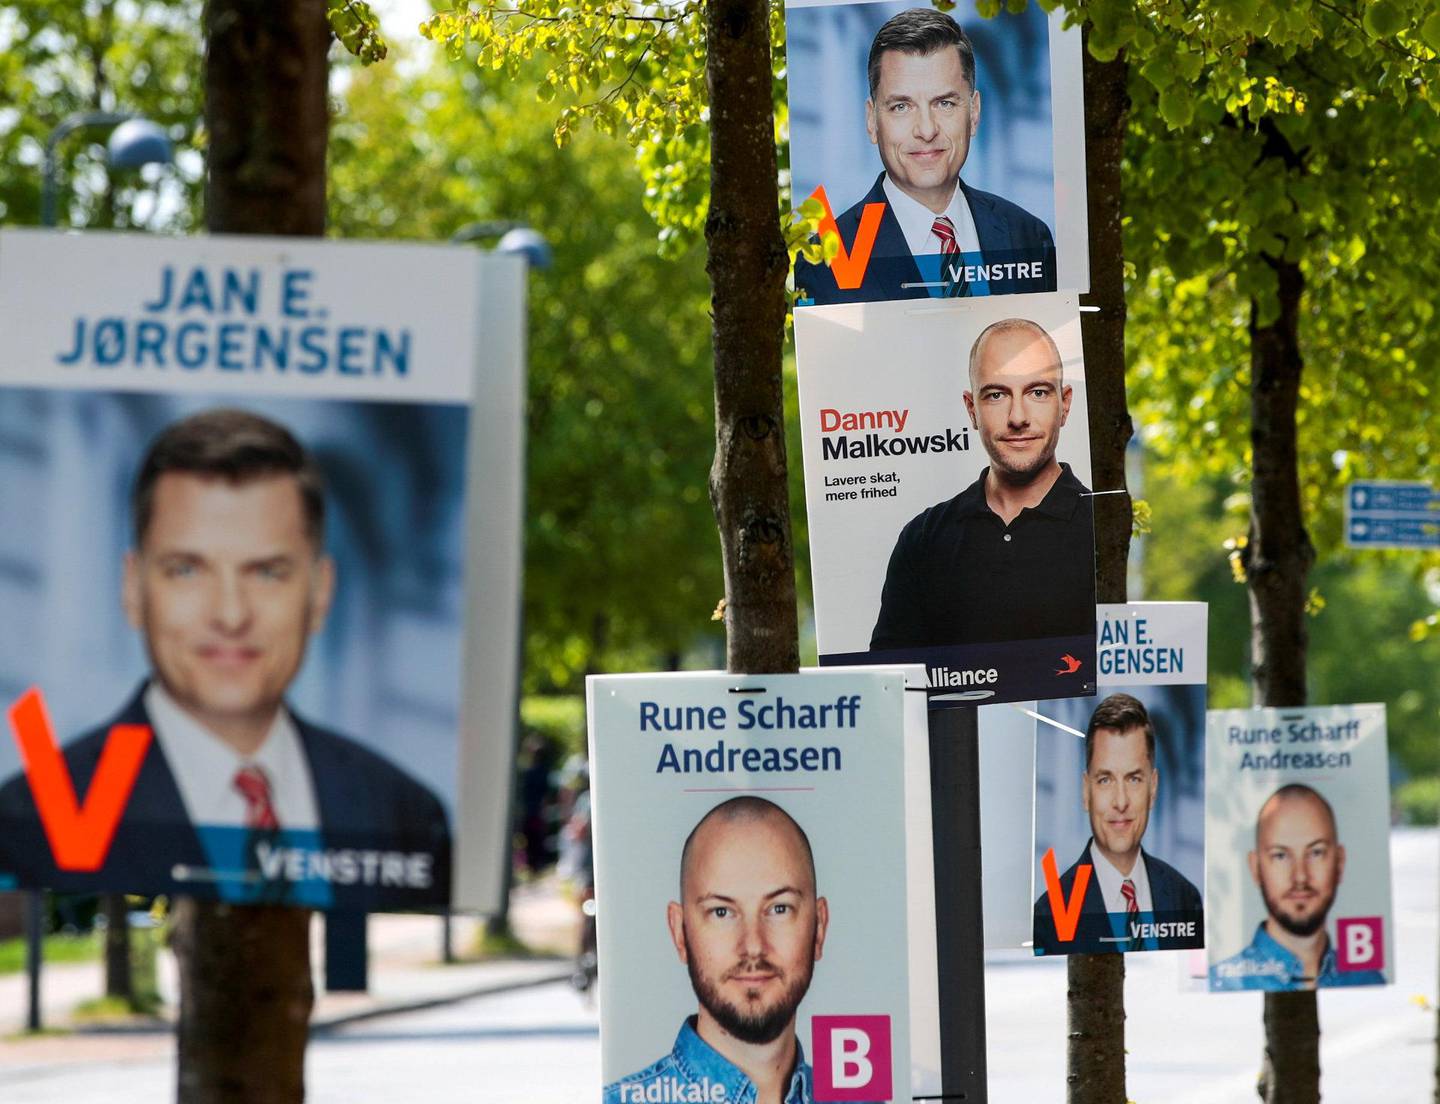 valgkamp: Plakater med de ulike kandidatene preger bybildet i København. FOTO: NTB SCANPIX